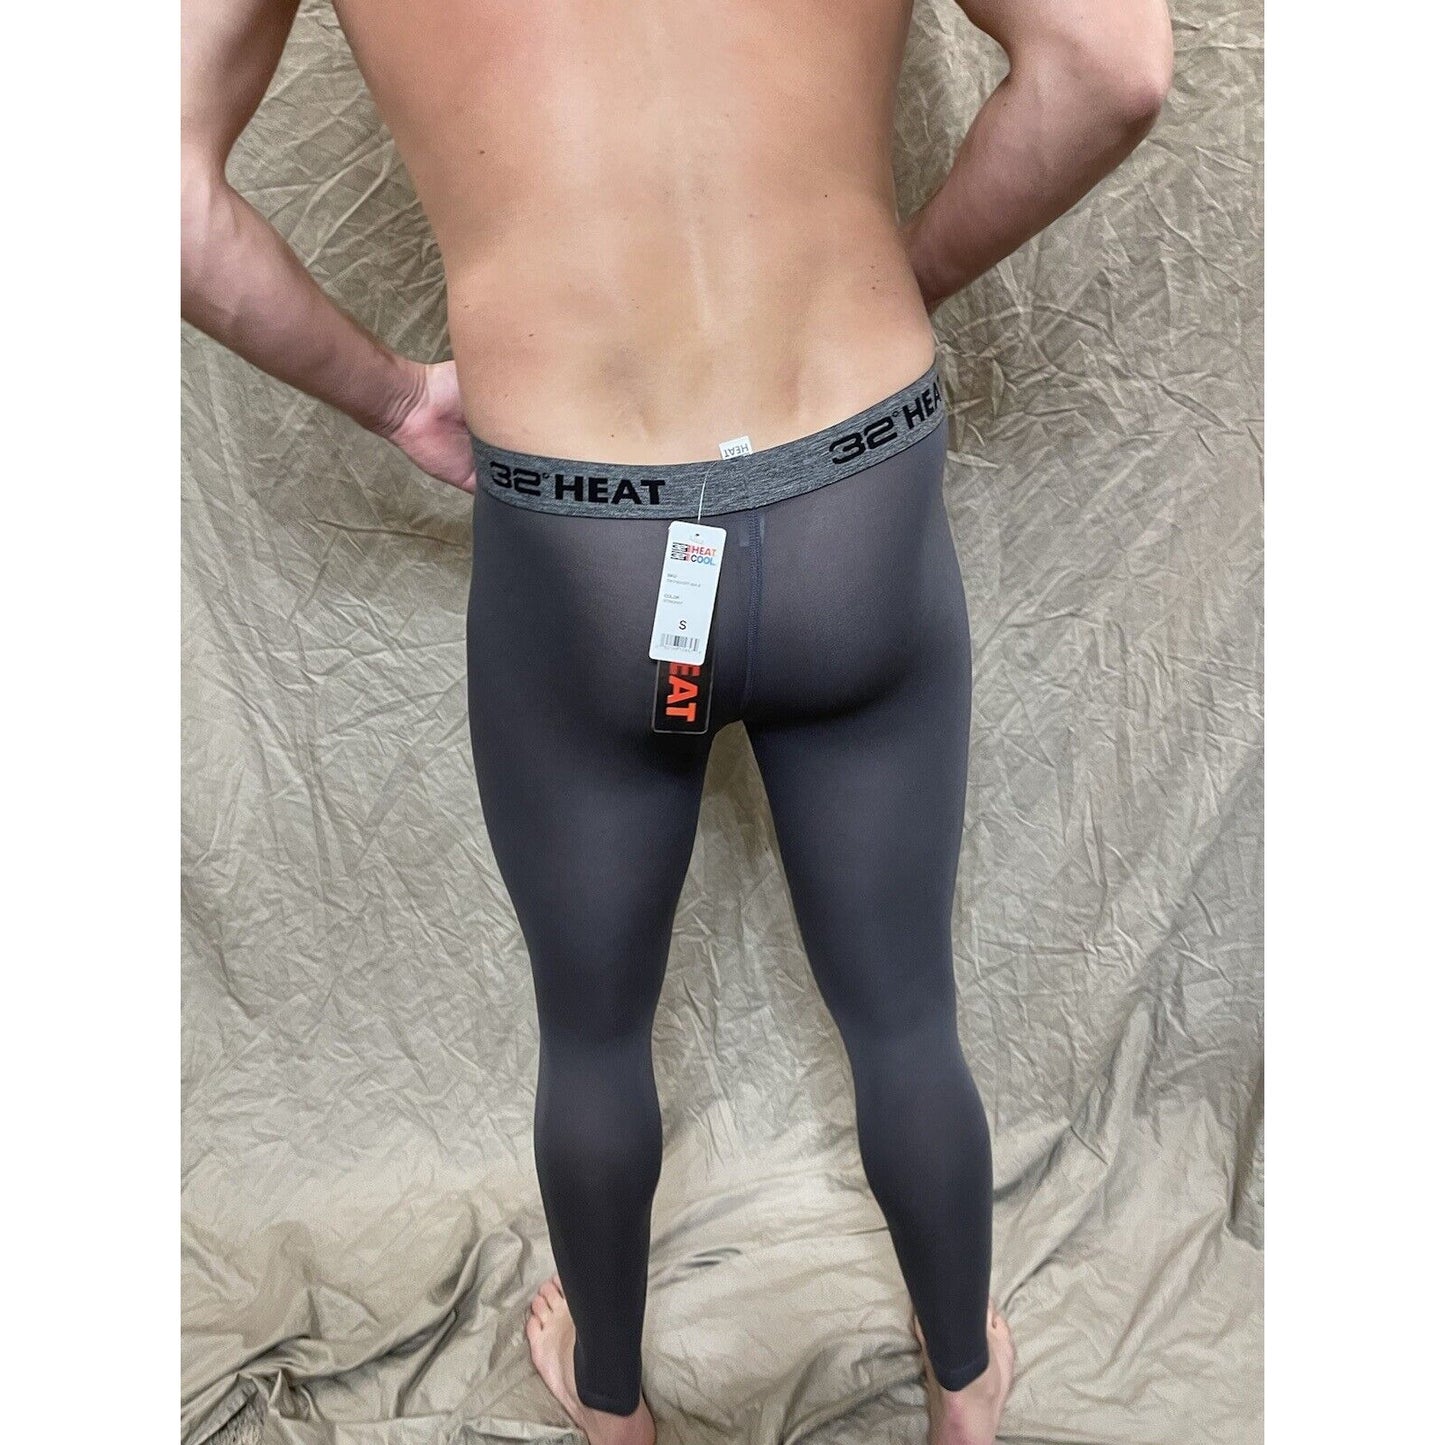 32 degree heat stingray gray compression leggings base layer long underwear small